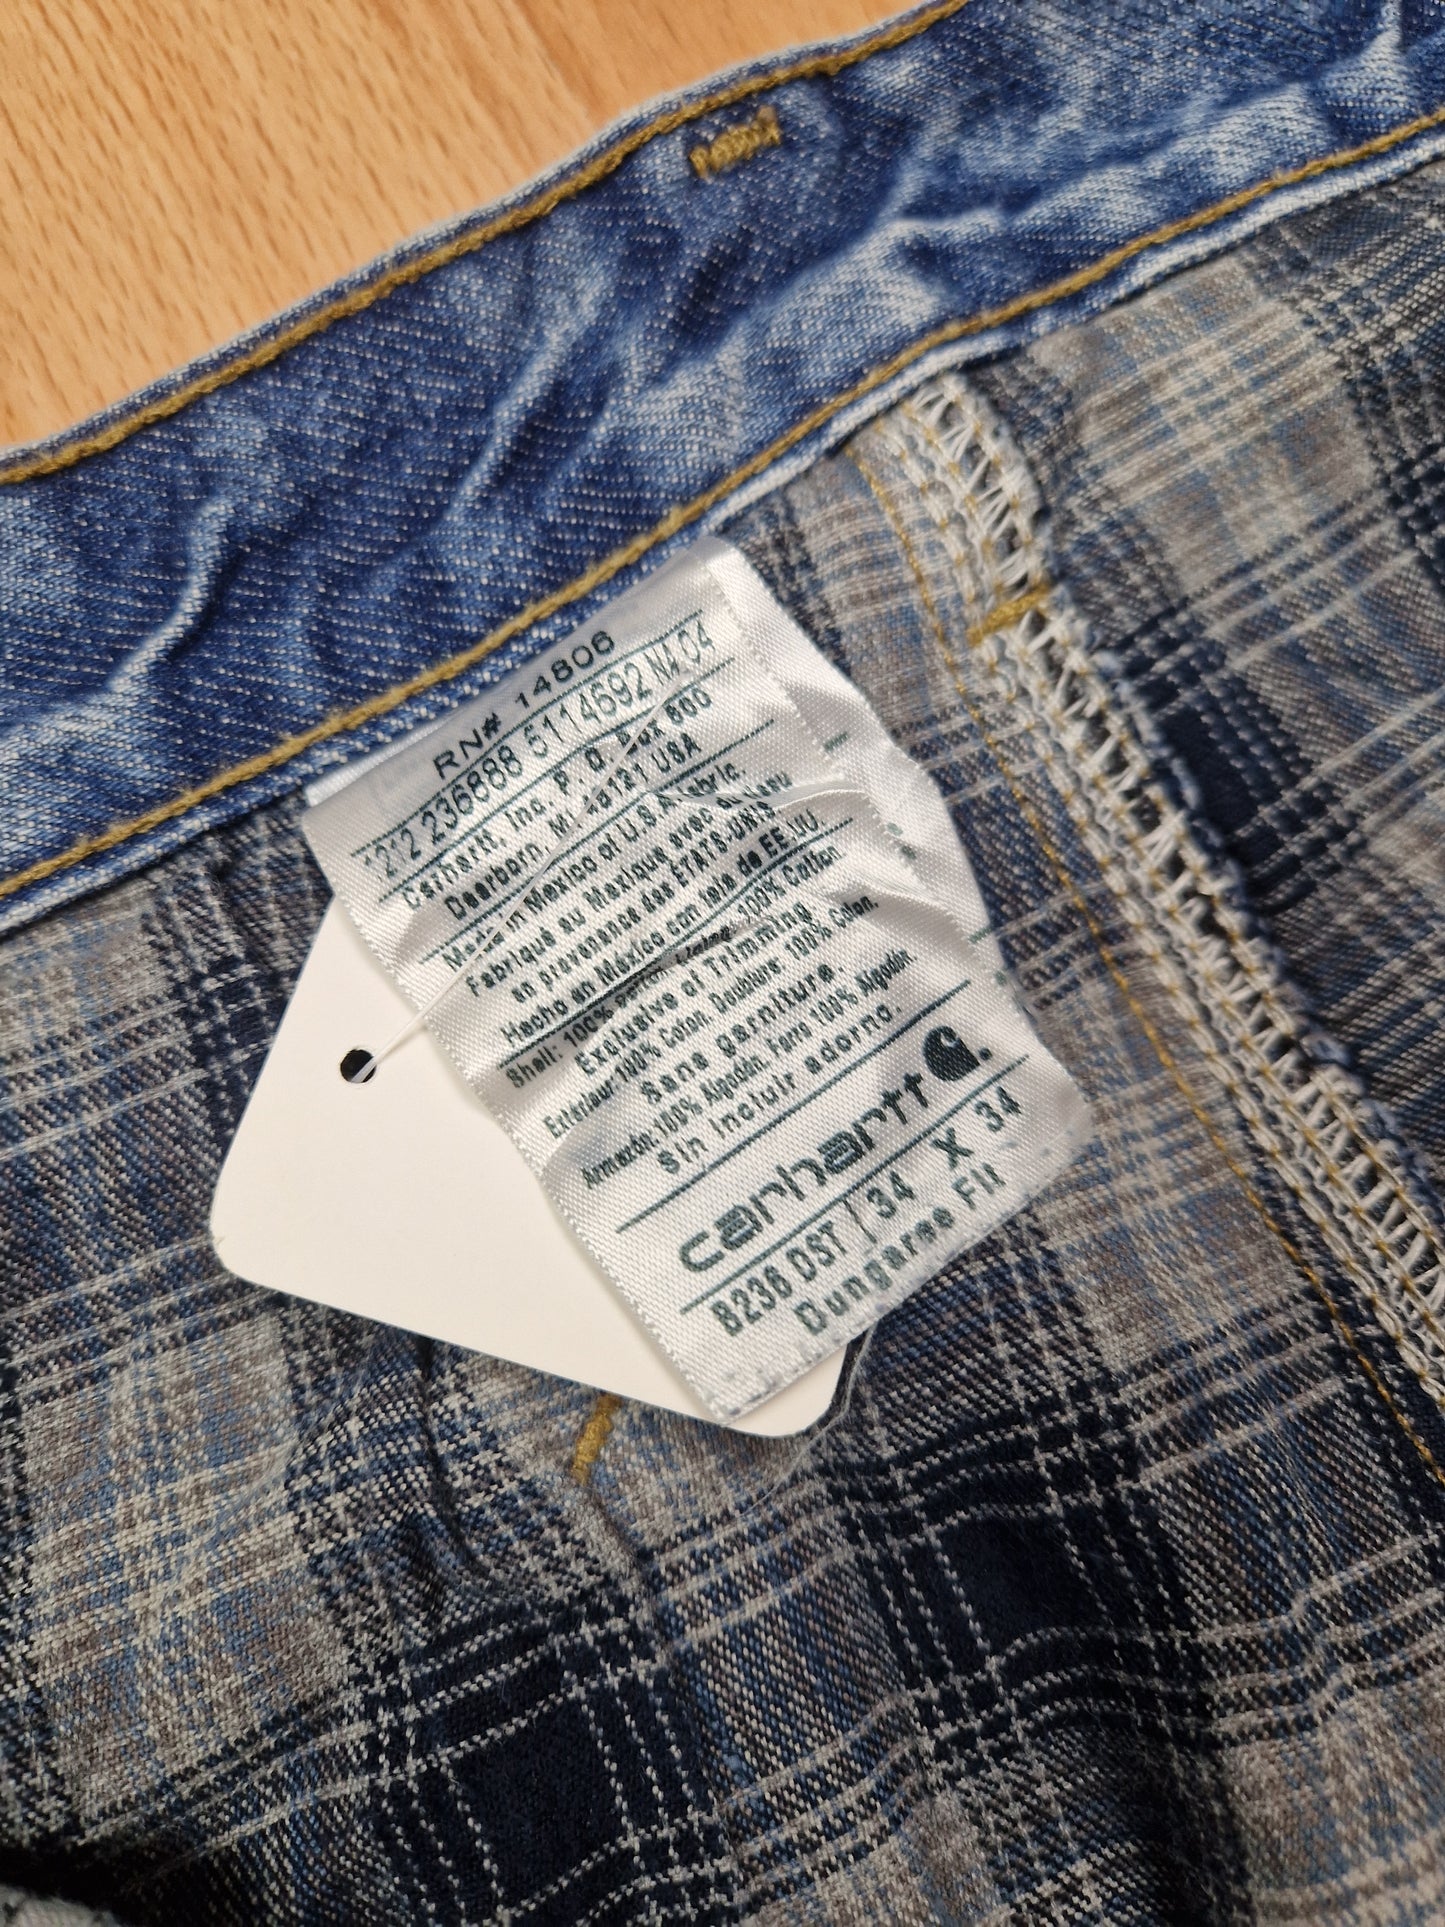 Vintage Carhartt Flannel Lined Denim Carpenter Pants (34x34)